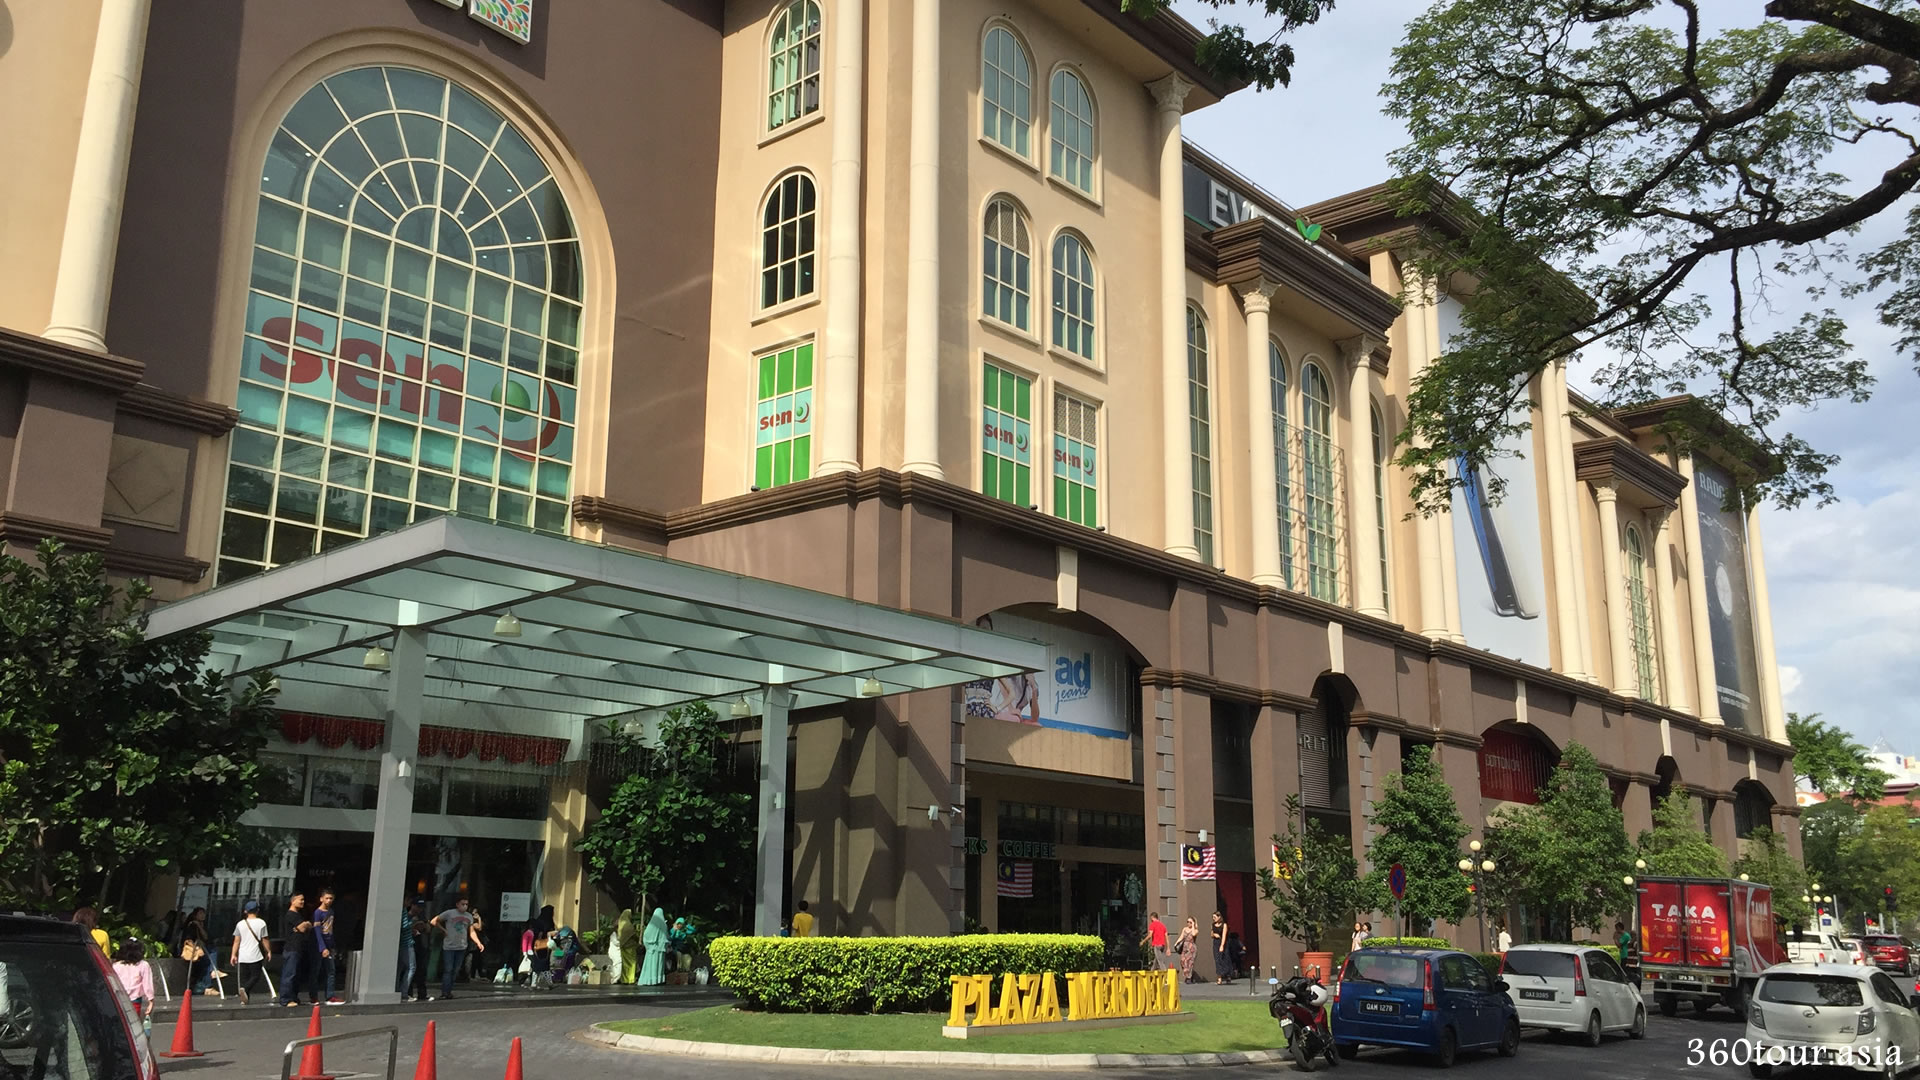 Waterfront Hotel Kuching Plaza Merdeka - Merdeka Palace Hotel & Suites